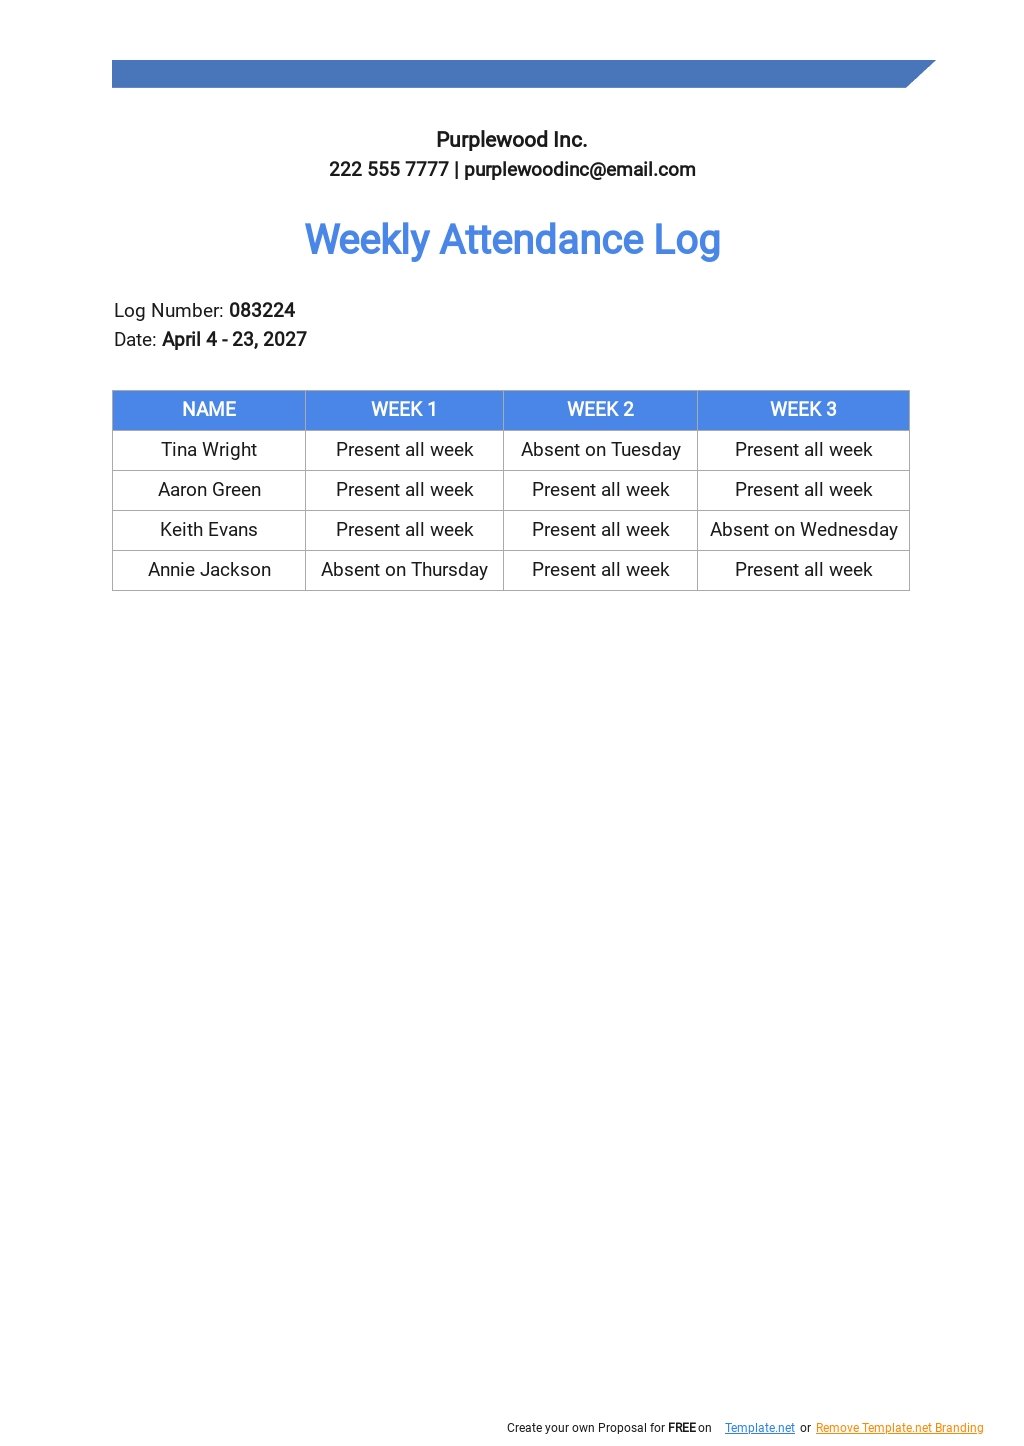 Weekly Attendance Log Template